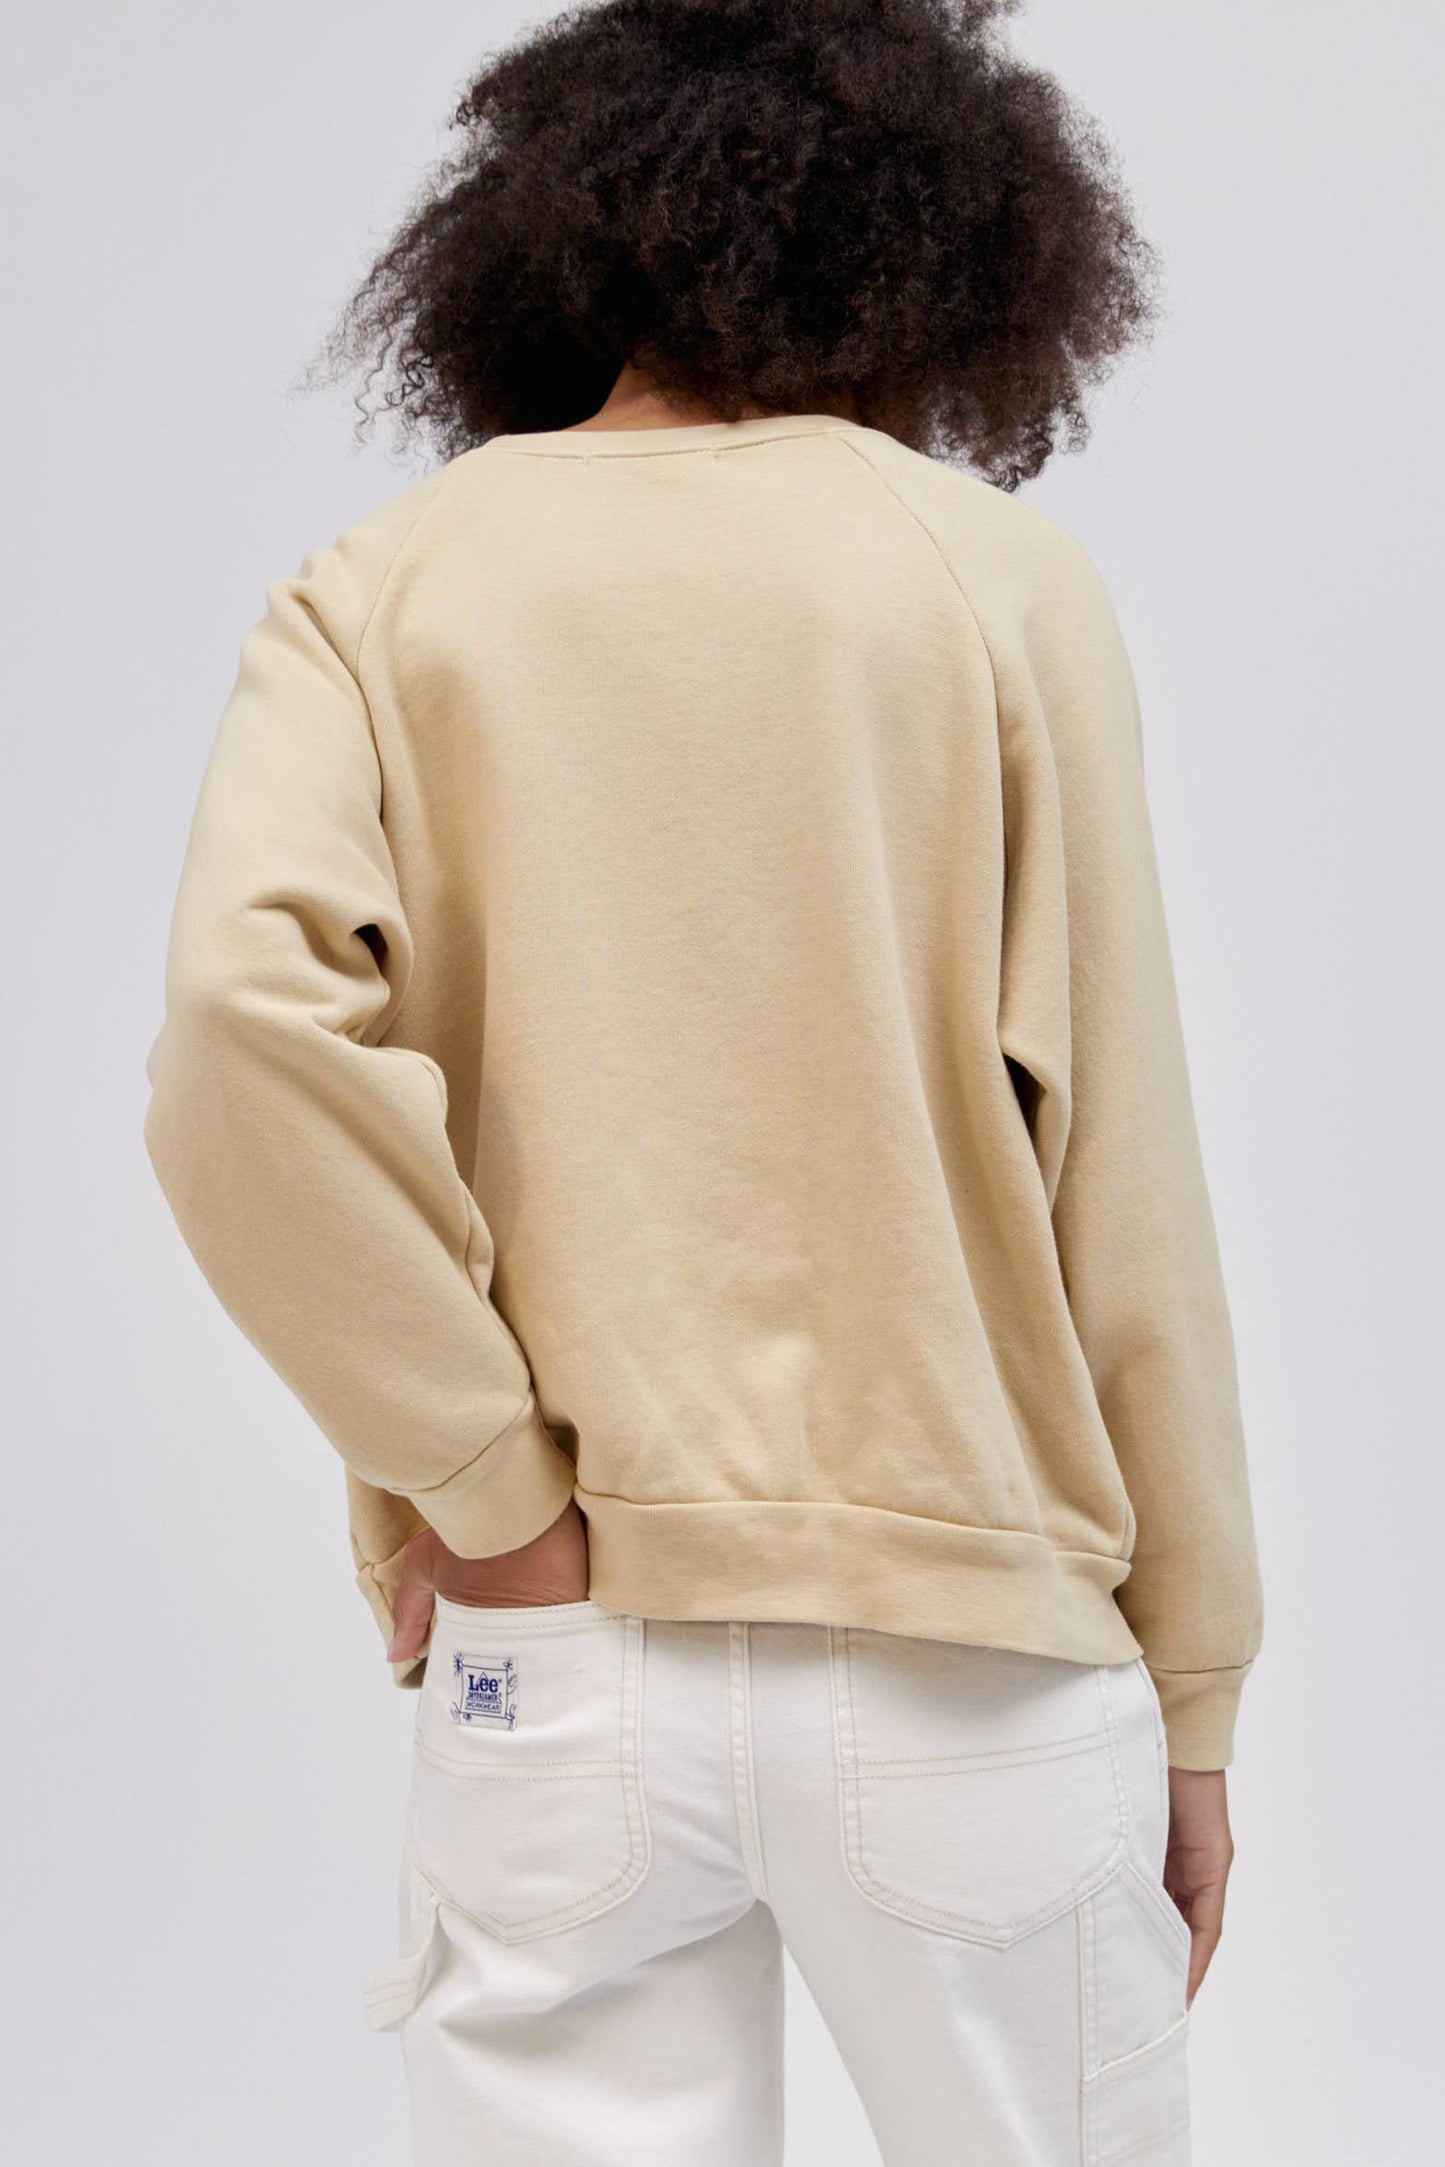 Lee x Daydreamer Genuine Quality Sweatshirt in Khaki